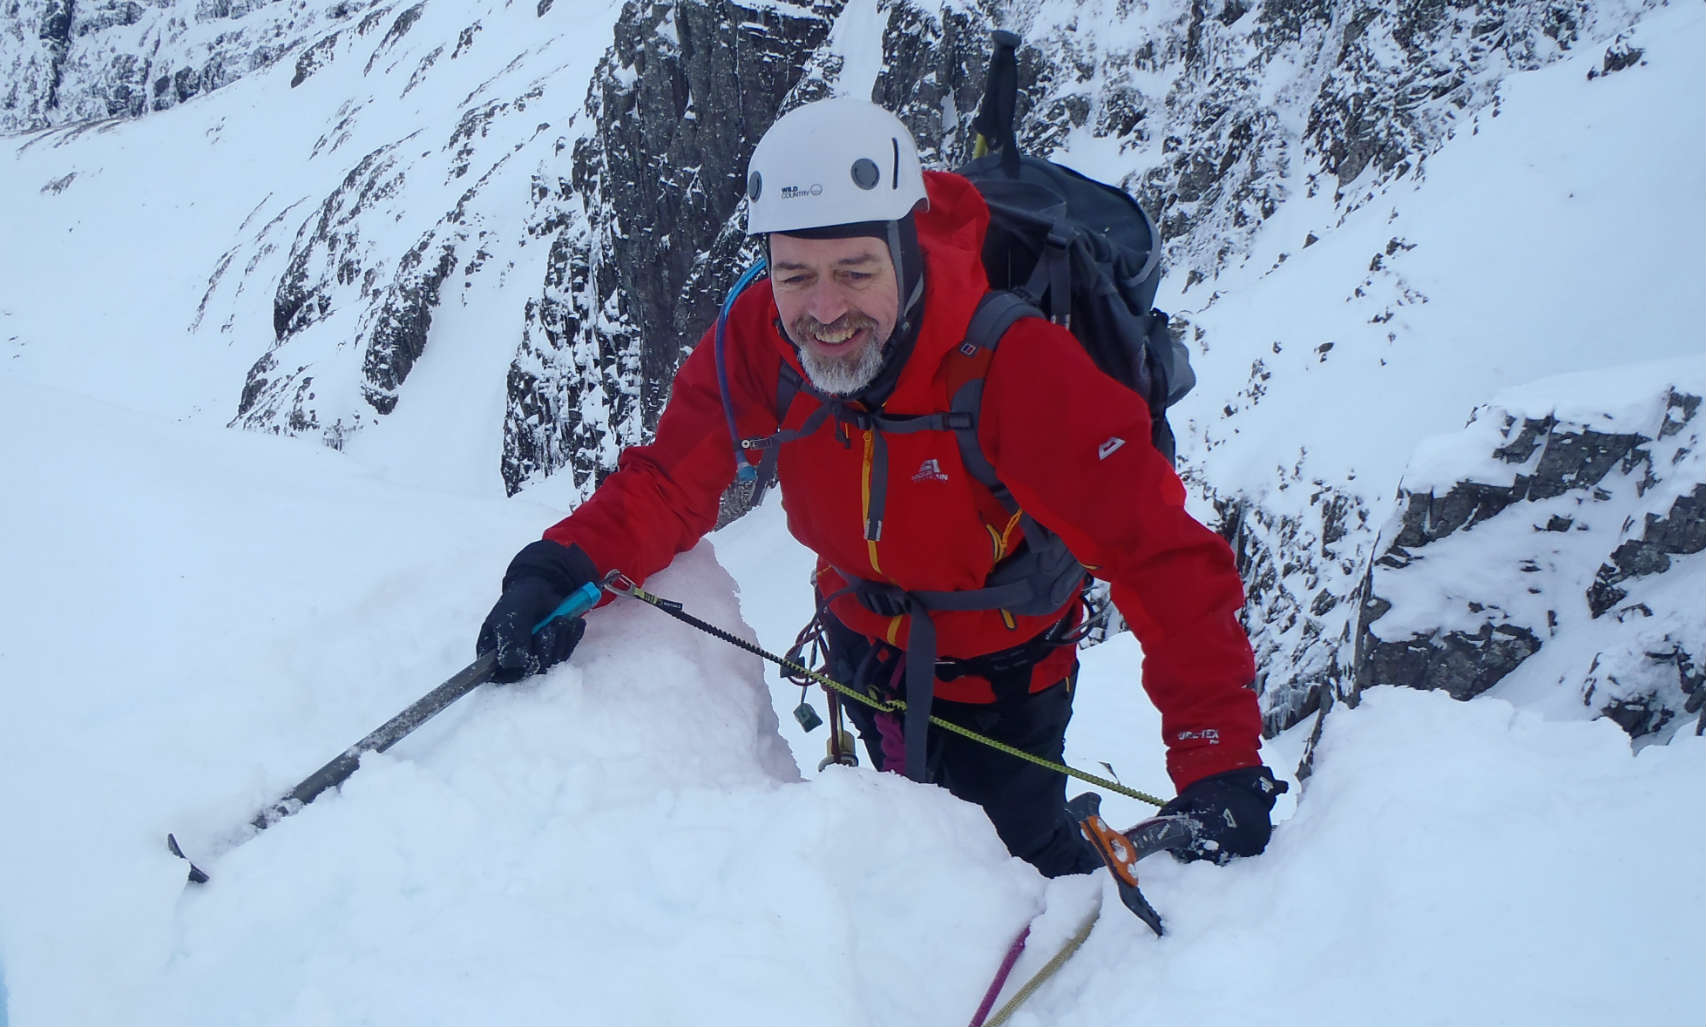 Squash player, Paul Main, attempts Matterhorn summit for charity